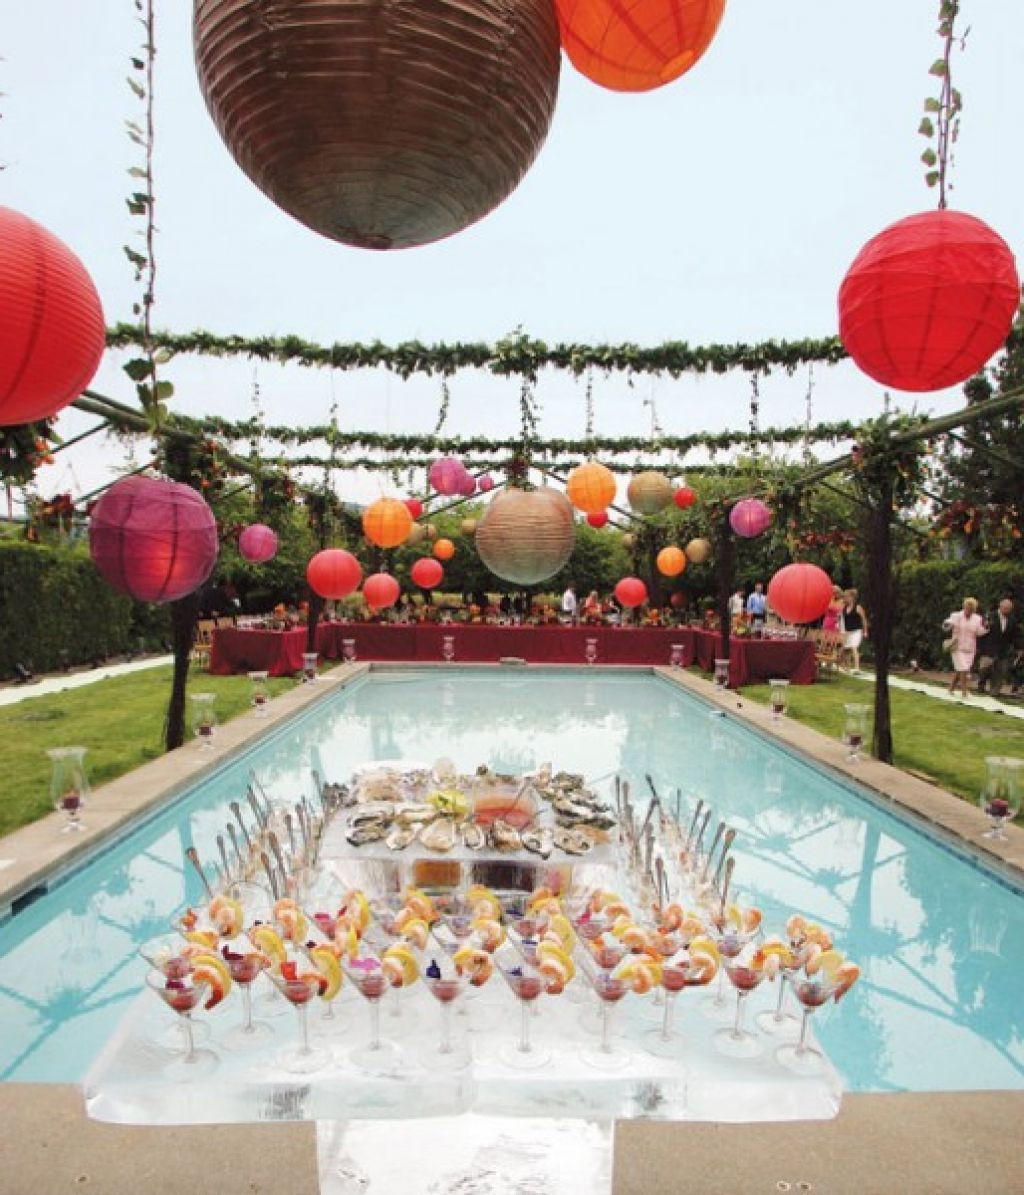 Pool Party Decoration Ideas
 Wedding Reception Pool Party Decorating Ideas – New